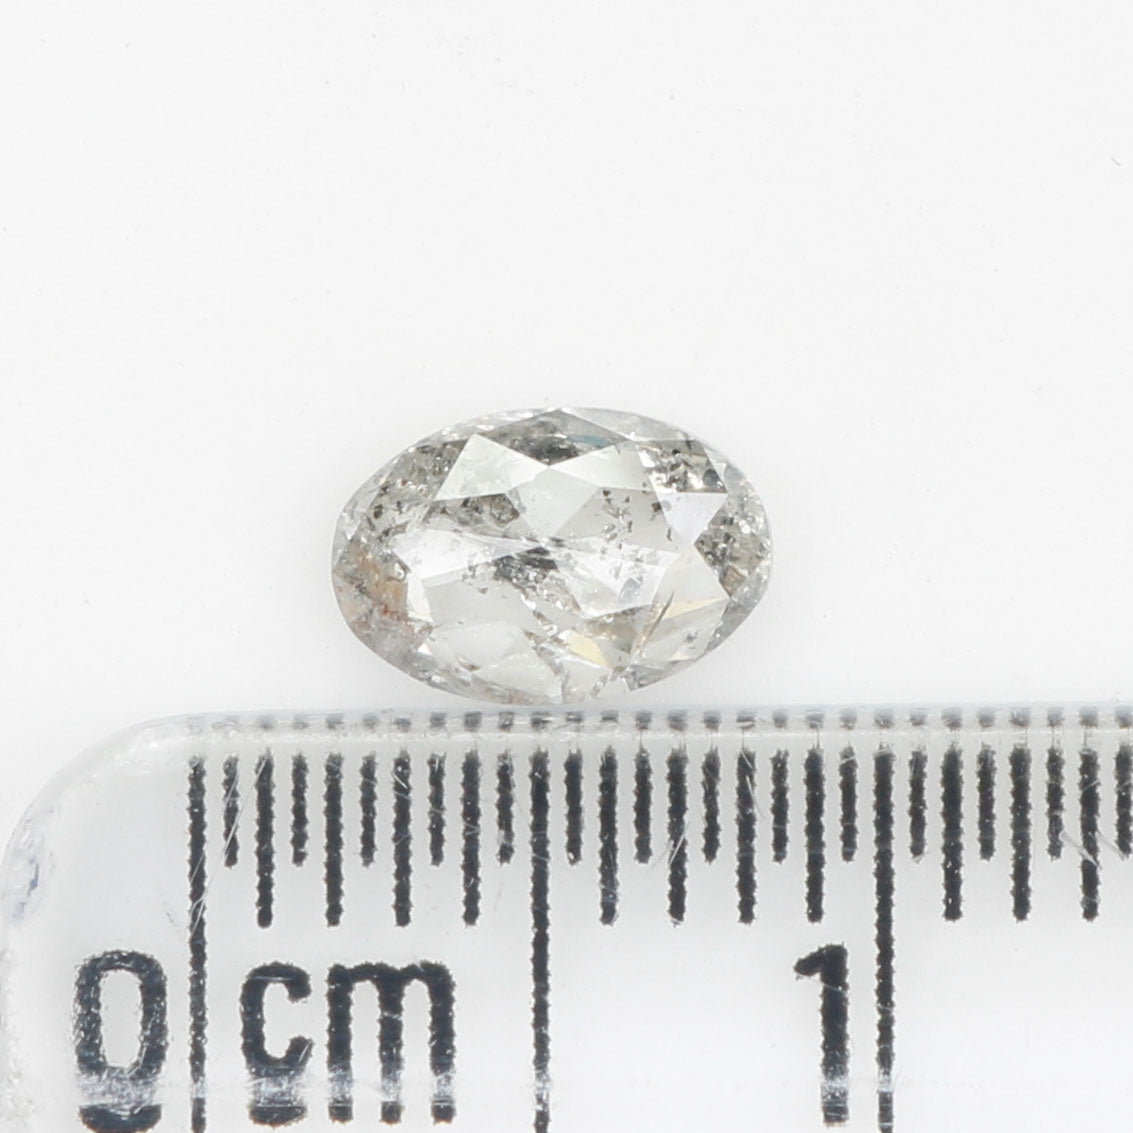 0.57 Ct Natural Loose Oval Shape Diamond Black Grey Color Oval Cut Diamond 6.45 MM Natural Loose Salt And Pepper Oval Shape Diamond QL9614